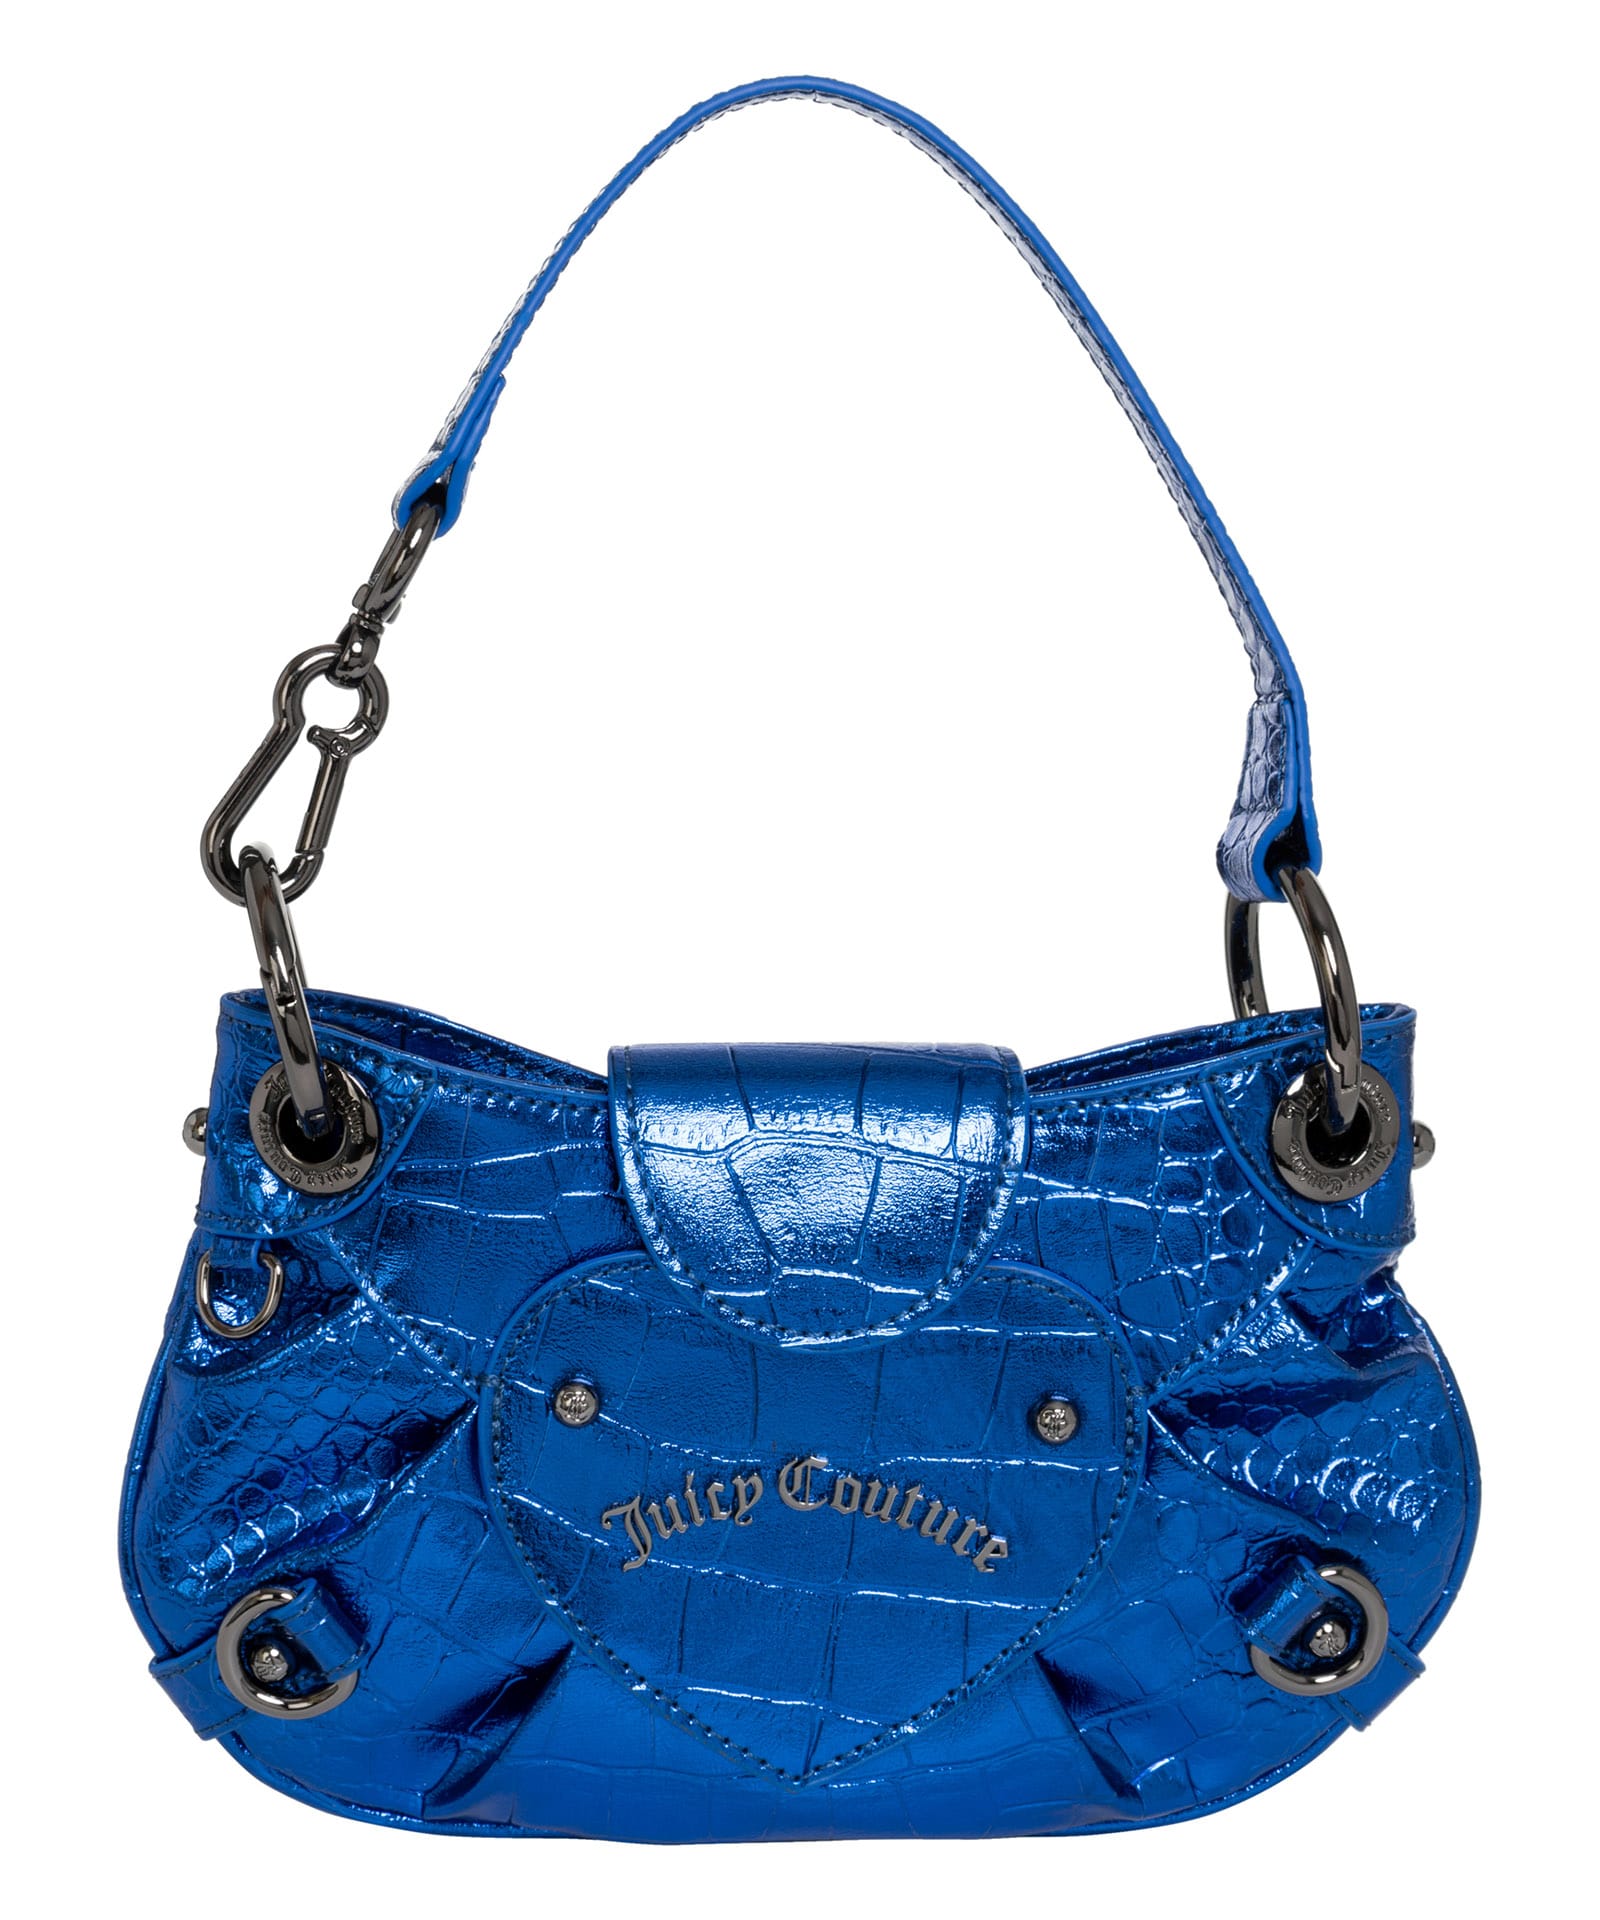 Juicy Couture Large Shoulder Bag Handbag Purse Palm Trees Back Blue Purple  Tote | eBay